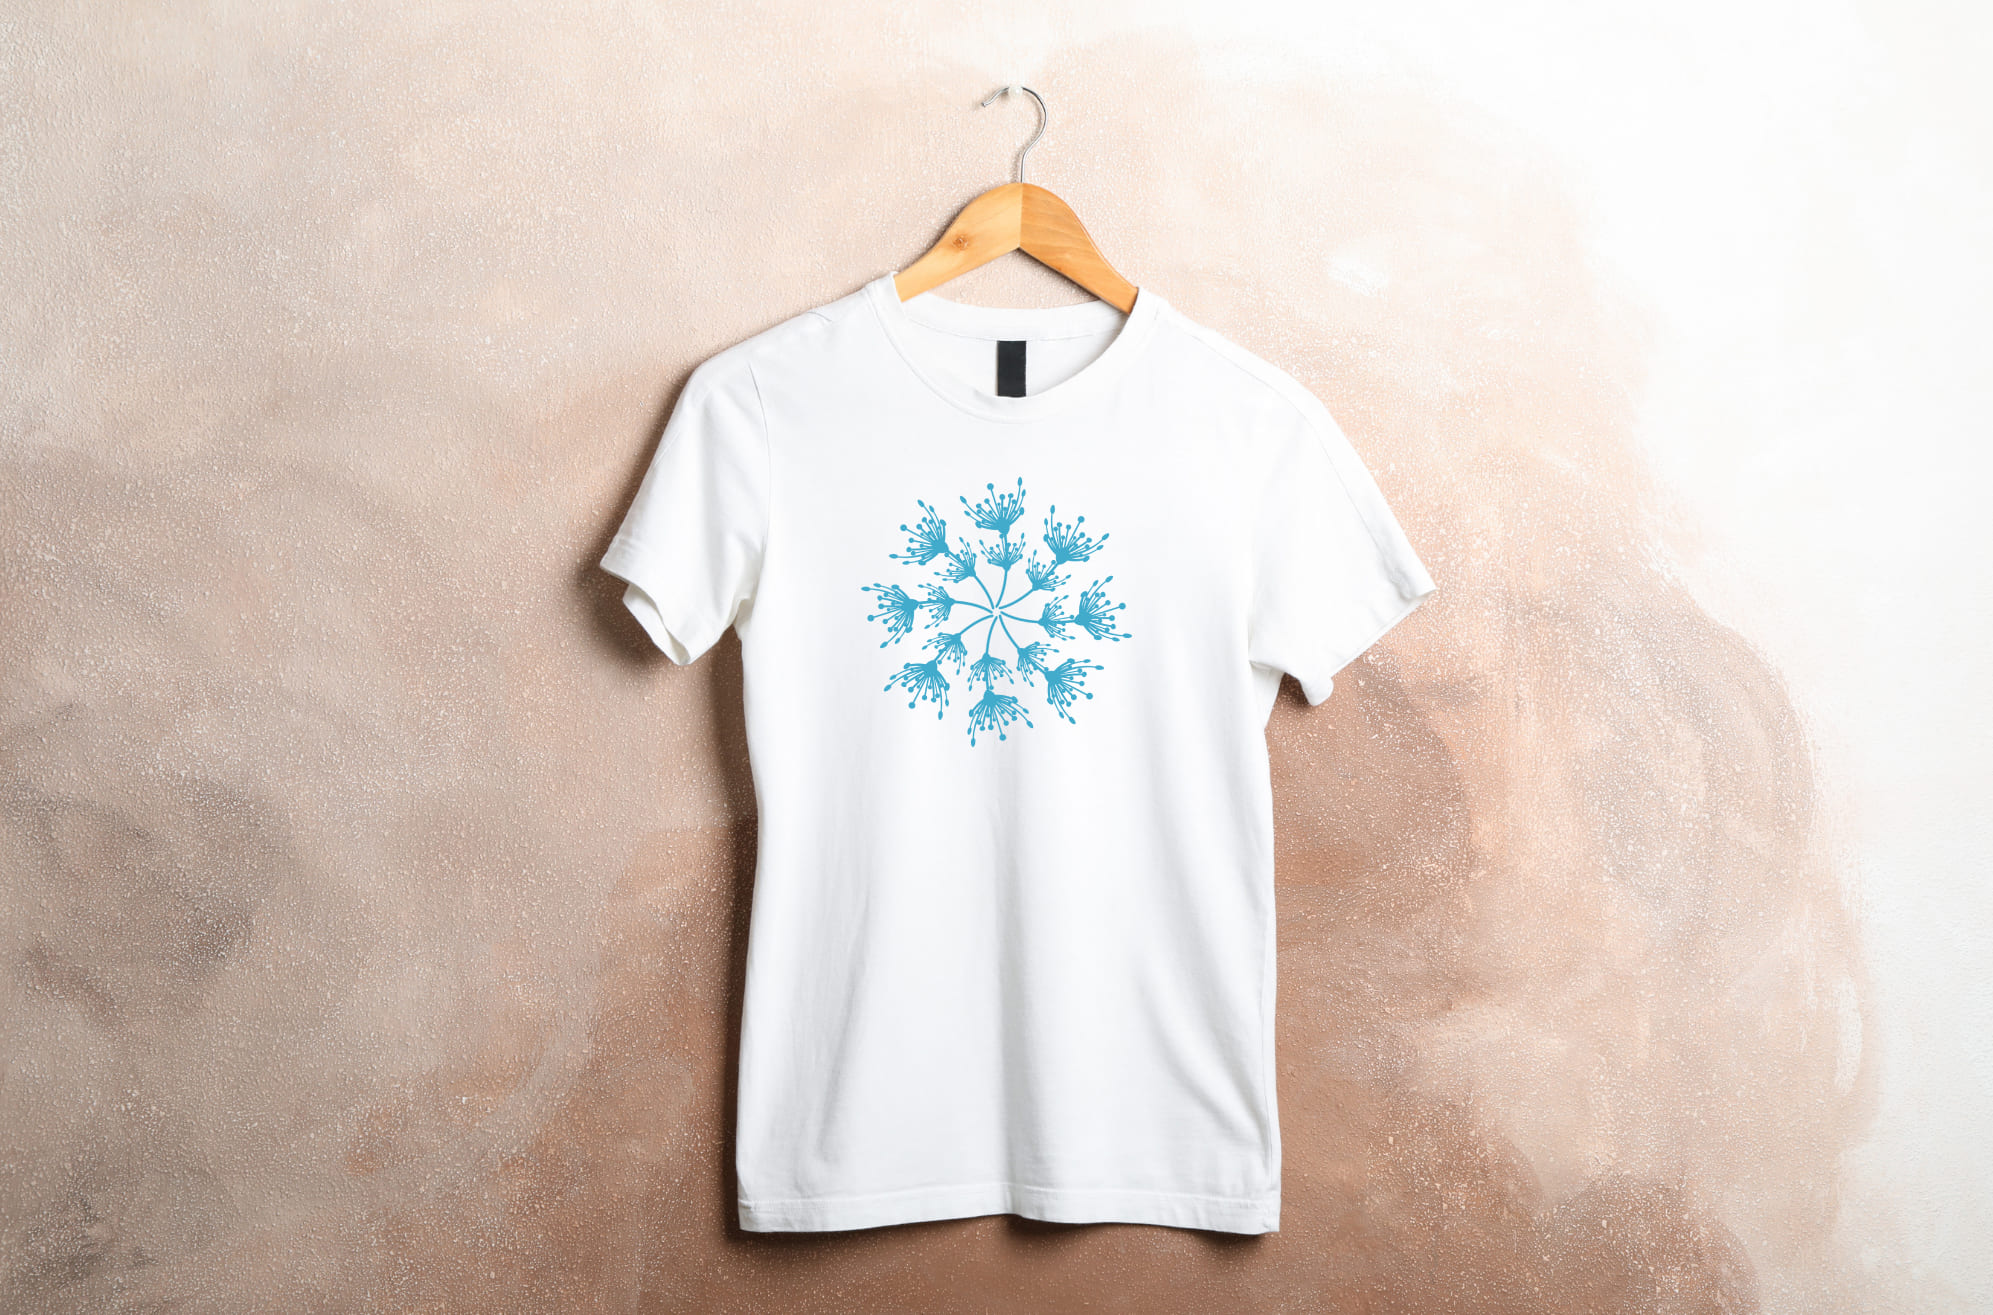 T-shirt image with wonderful blue dandelion print.